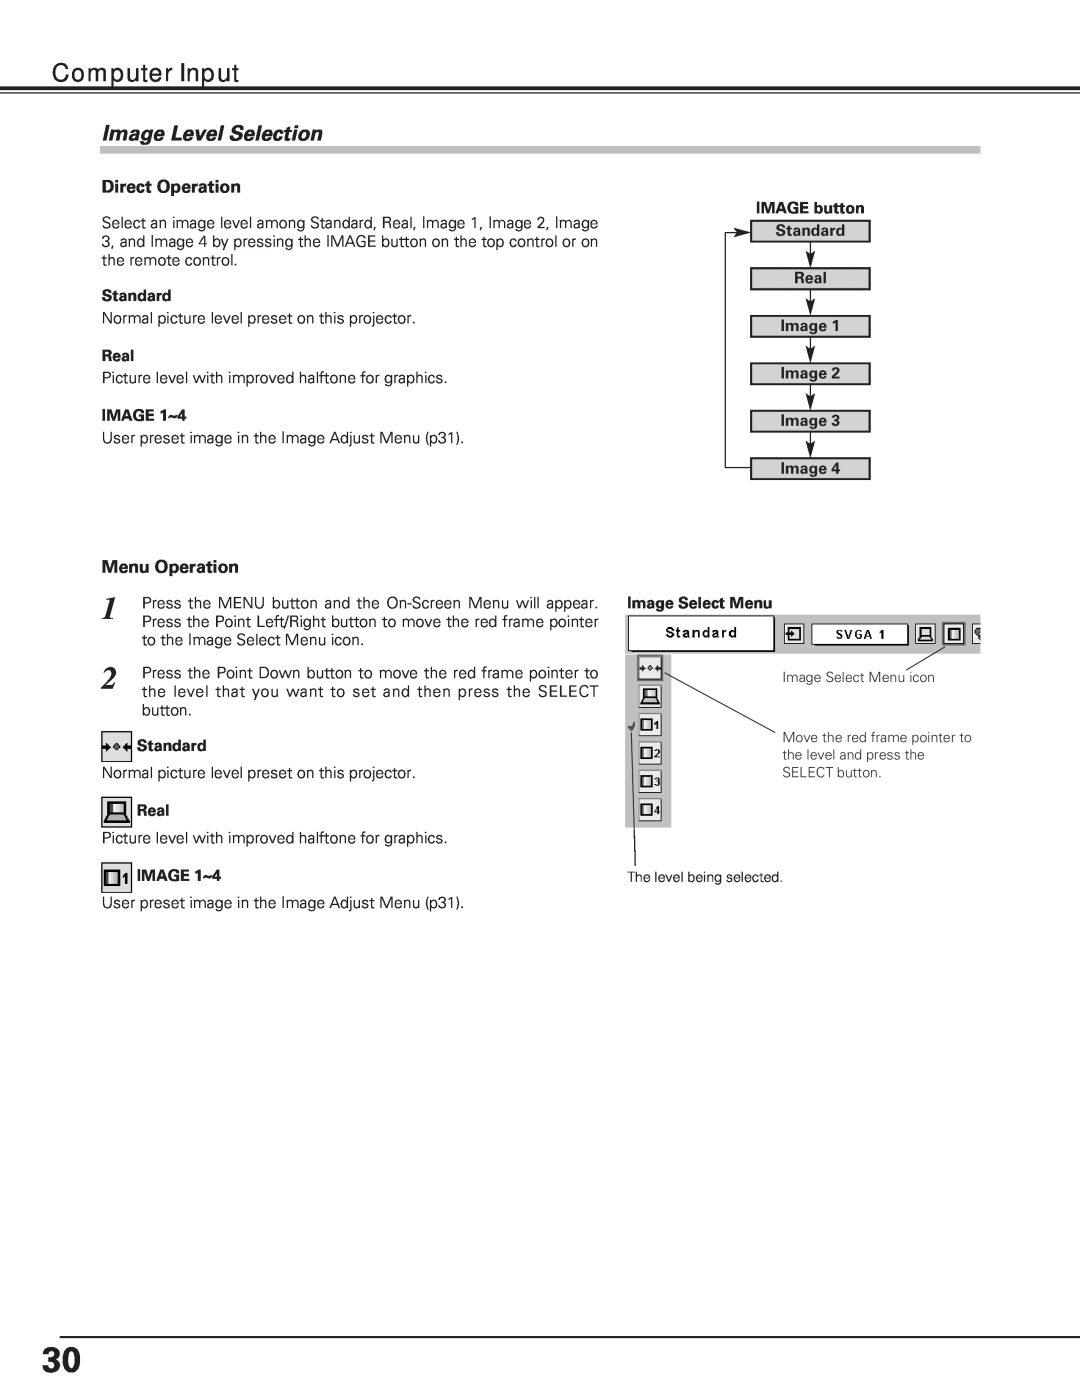 Eiki LC-XE10 instruction manual Image Level Selection, Computer Input, Standard, Real, IMAGE 1~4, Image Select Menu 